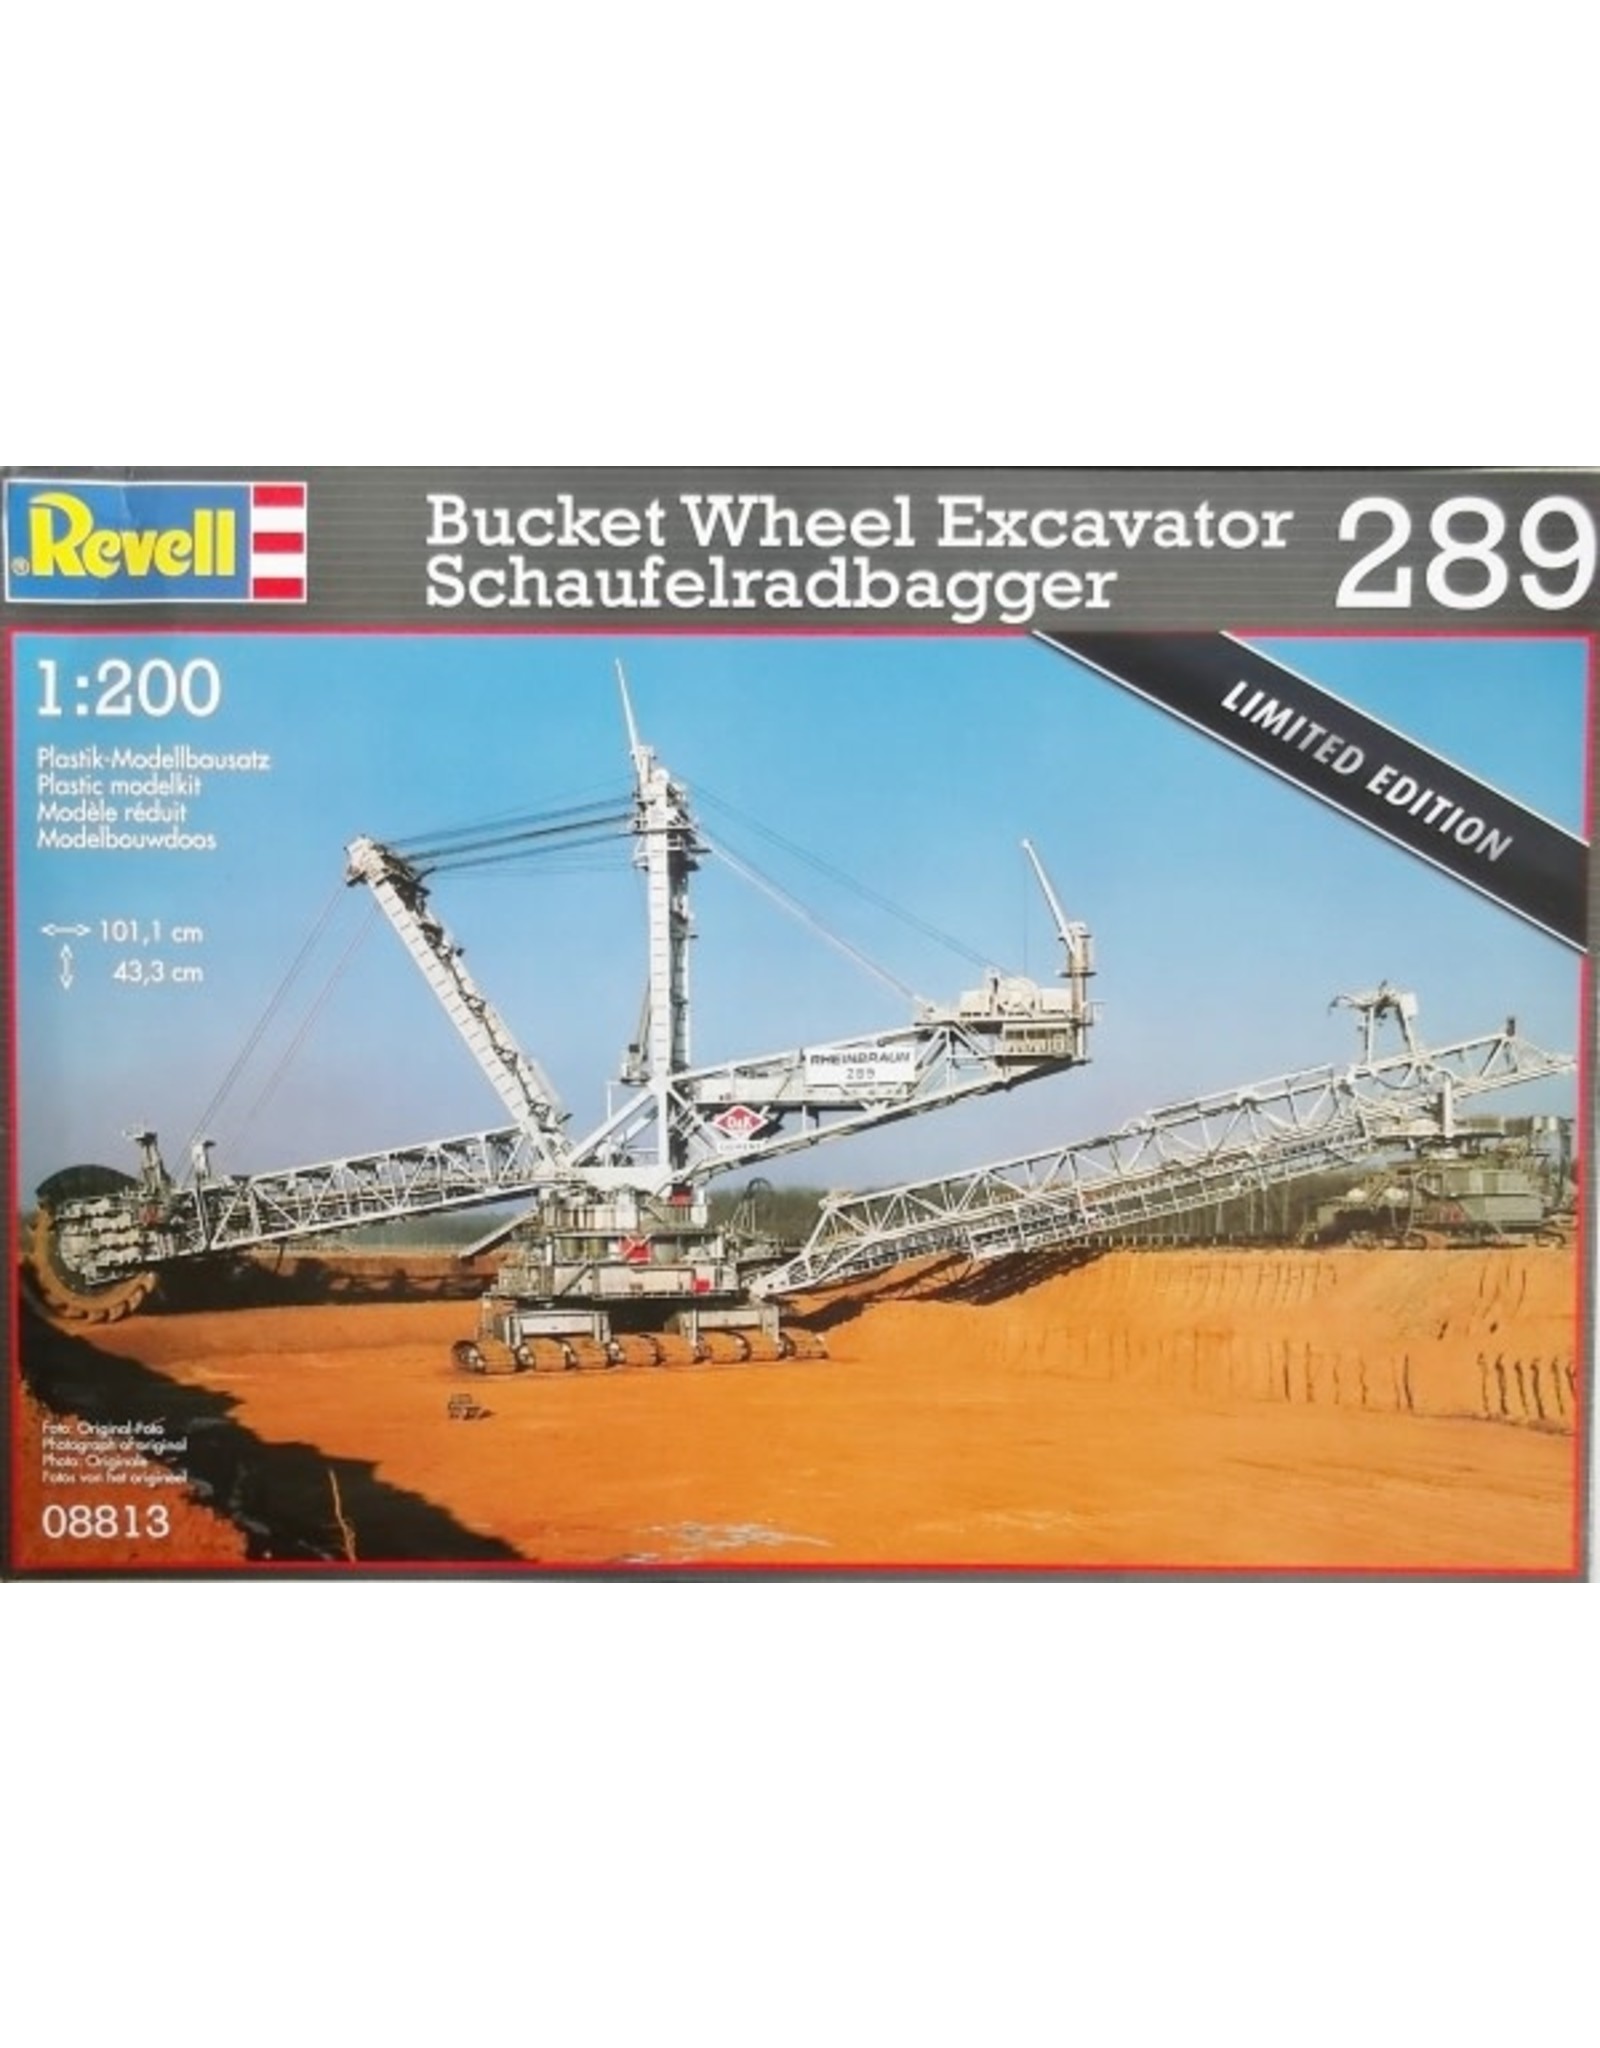 Revell Bucket wheel excavator